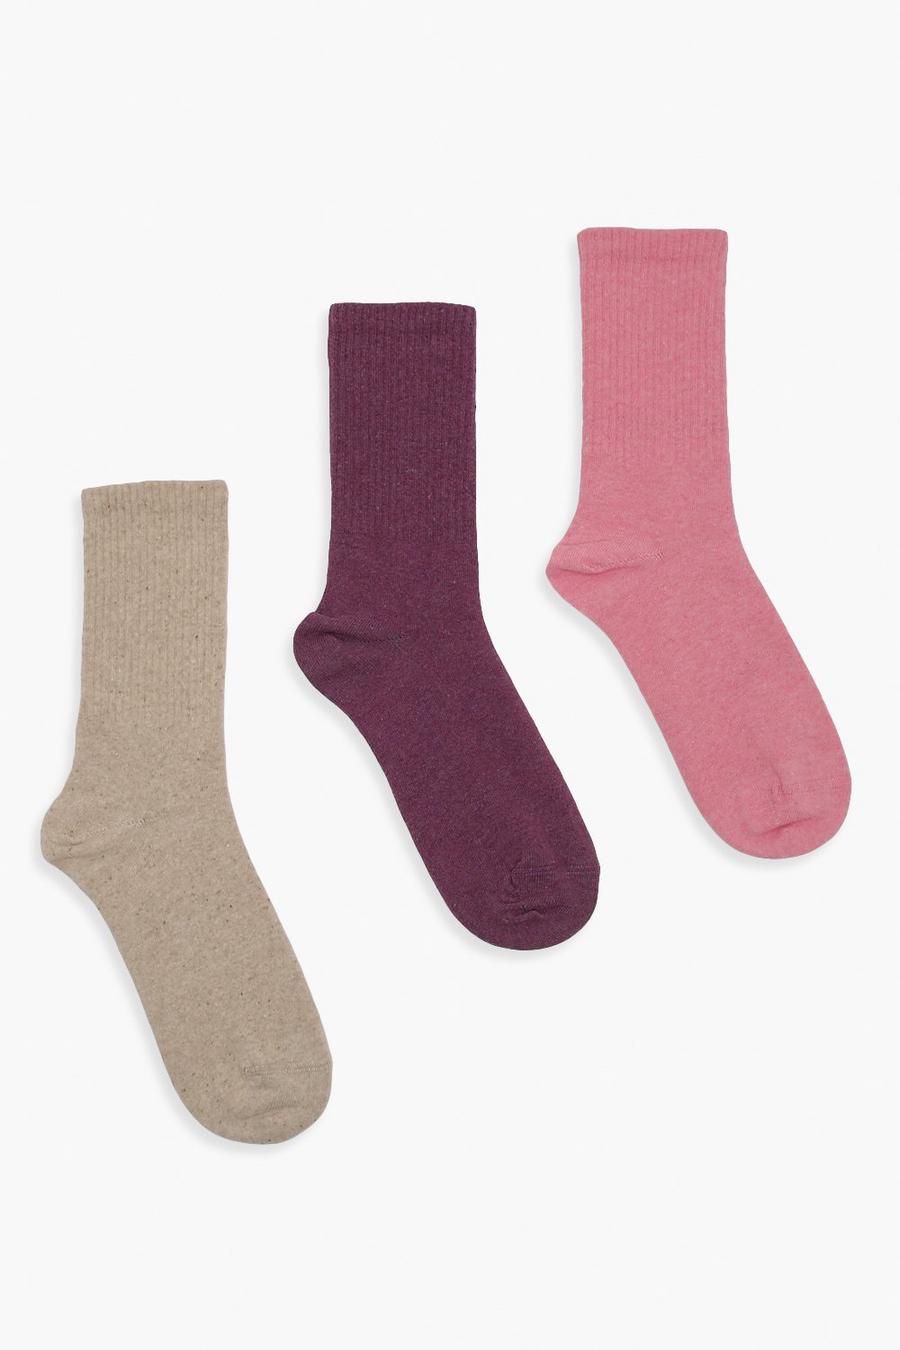 Multi Neutral, Purple, & Pink Socks 3 Pack